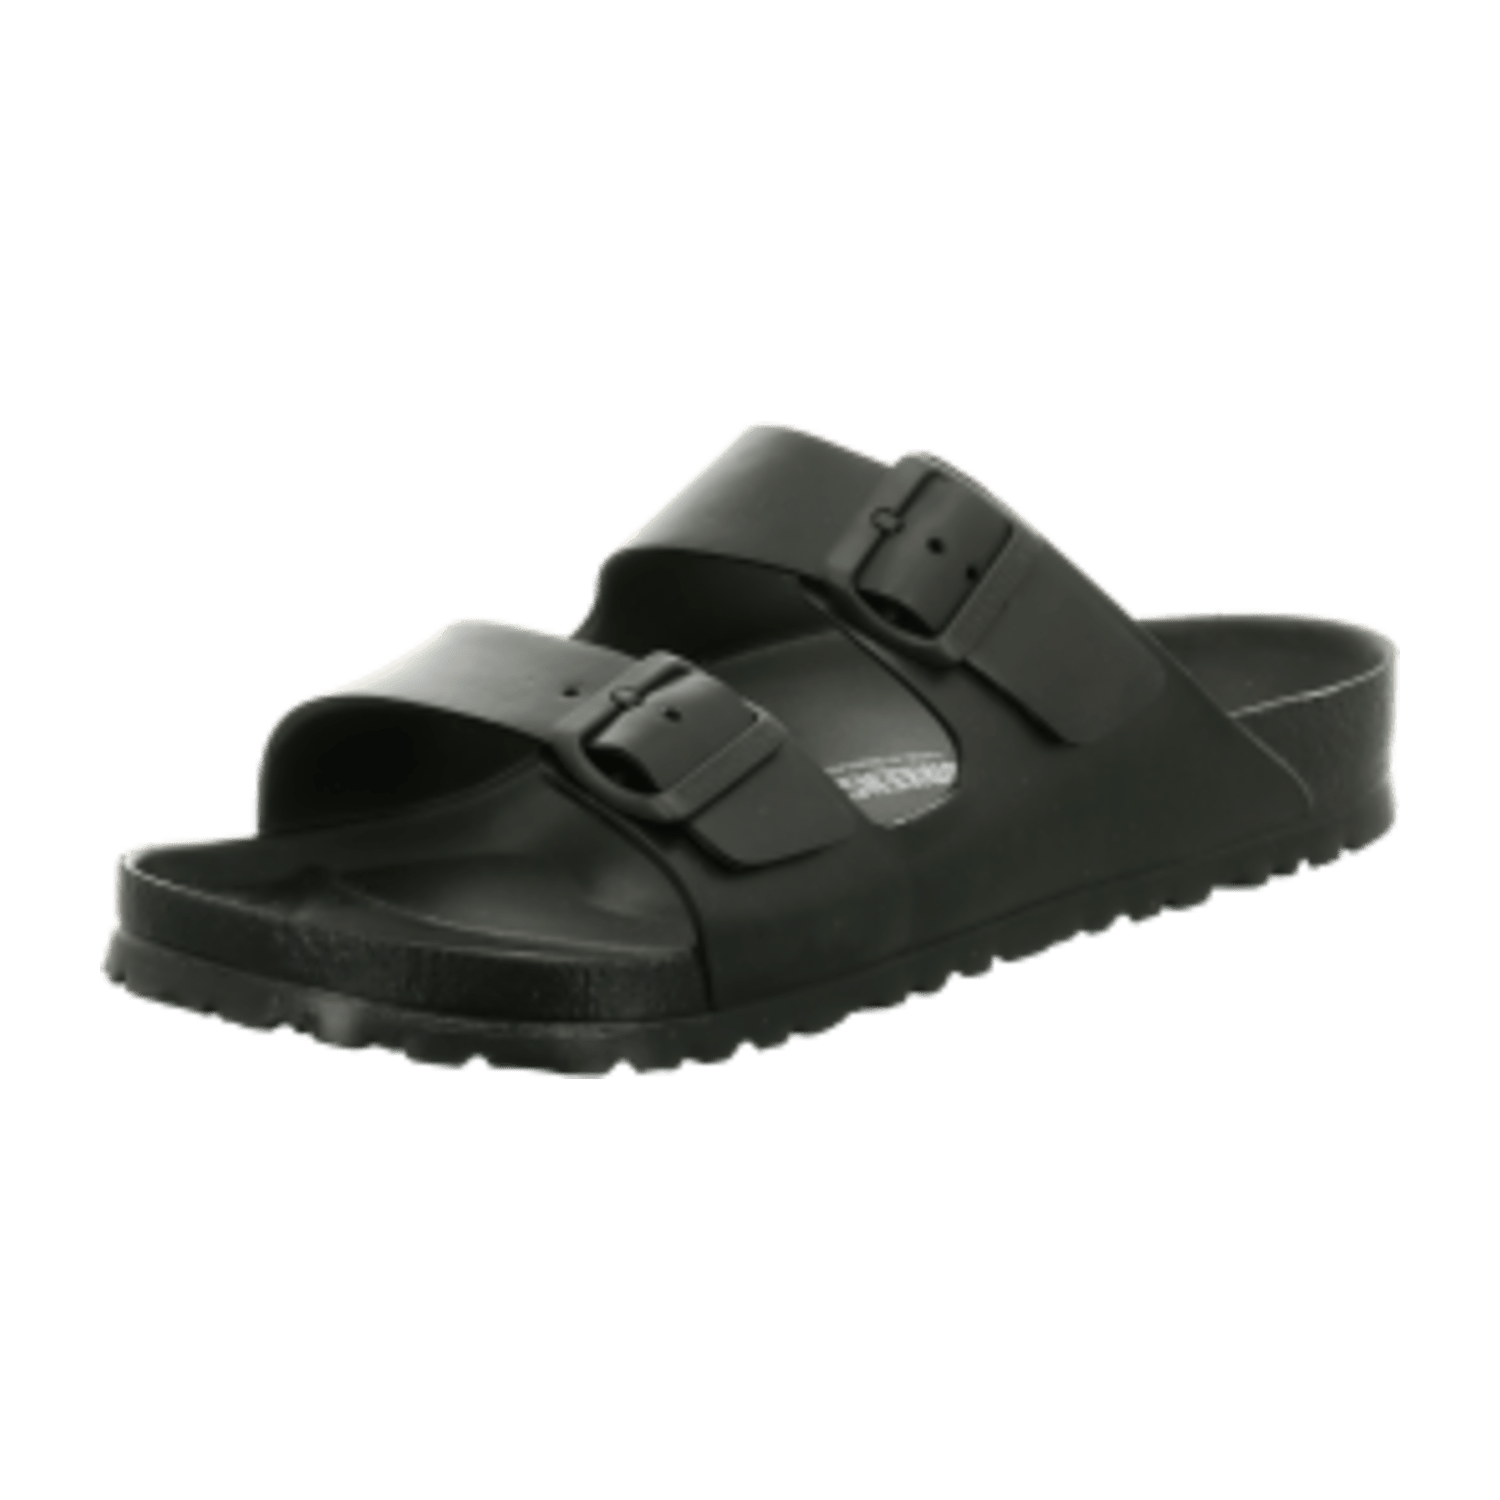 Birkenstock Arizona EVA[Kunststoff-Sandal]